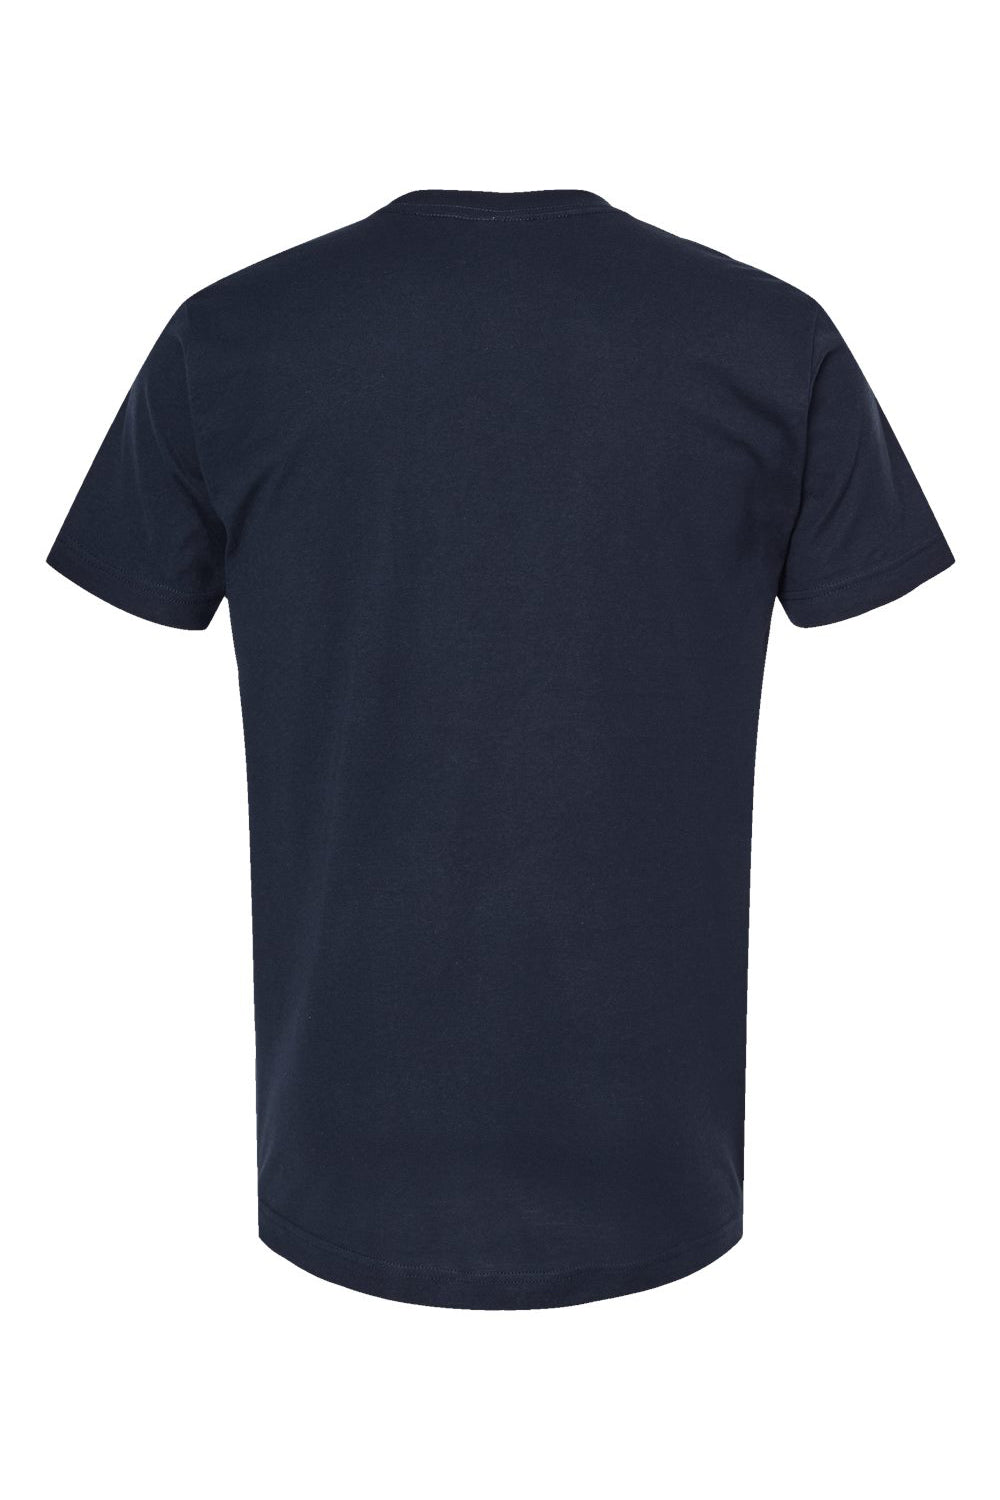 Tultex 202 Mens Fine Jersey Short Sleeve Crewneck T-Shirt Navy Blue Flat Back